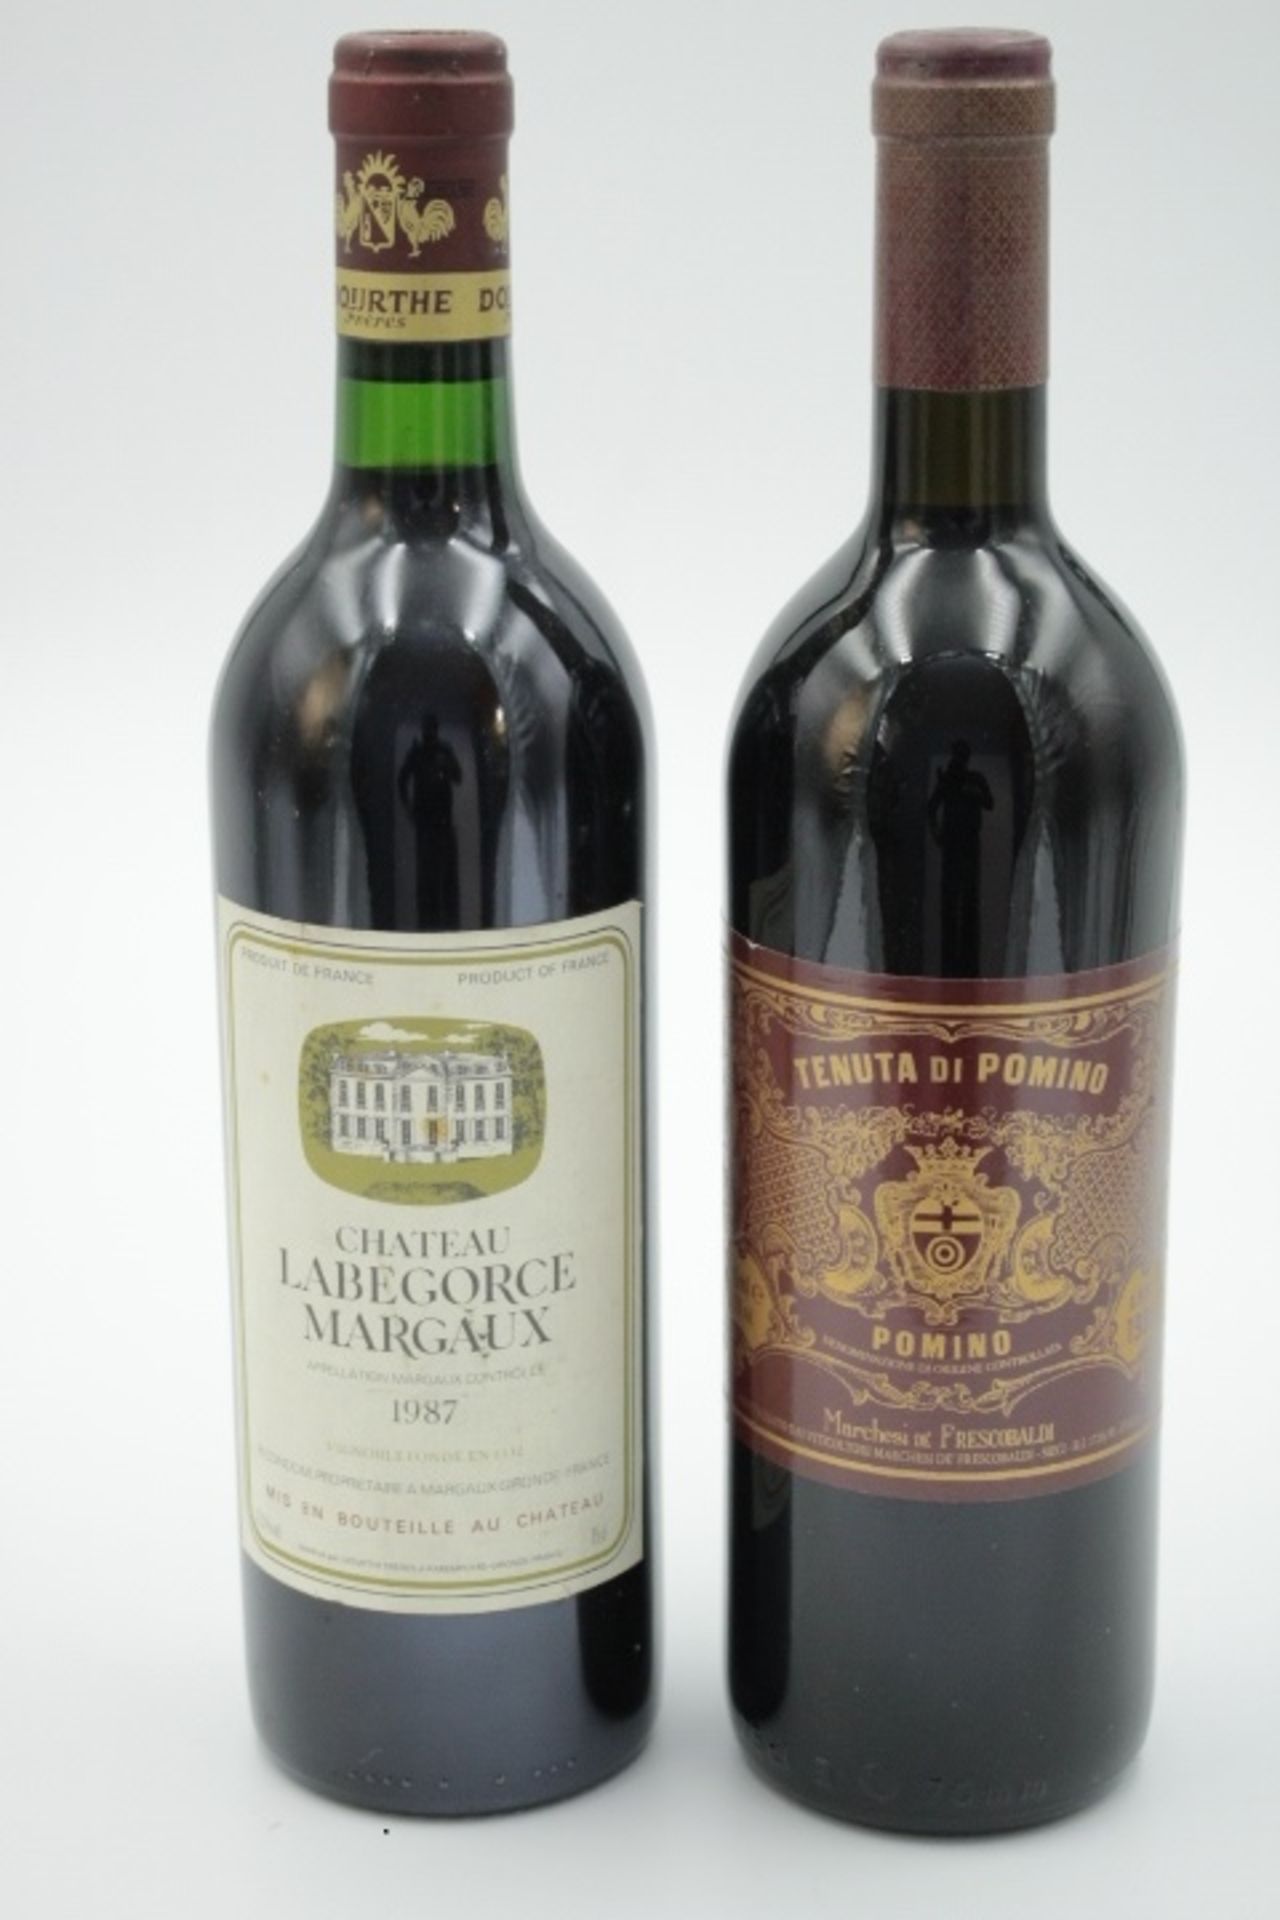 Paar Flaschen Rotwein 1.Tenuta di Pomino 1986 Marchesi de Frescobaldi,Italy 750 ml 12% Vol. 2.